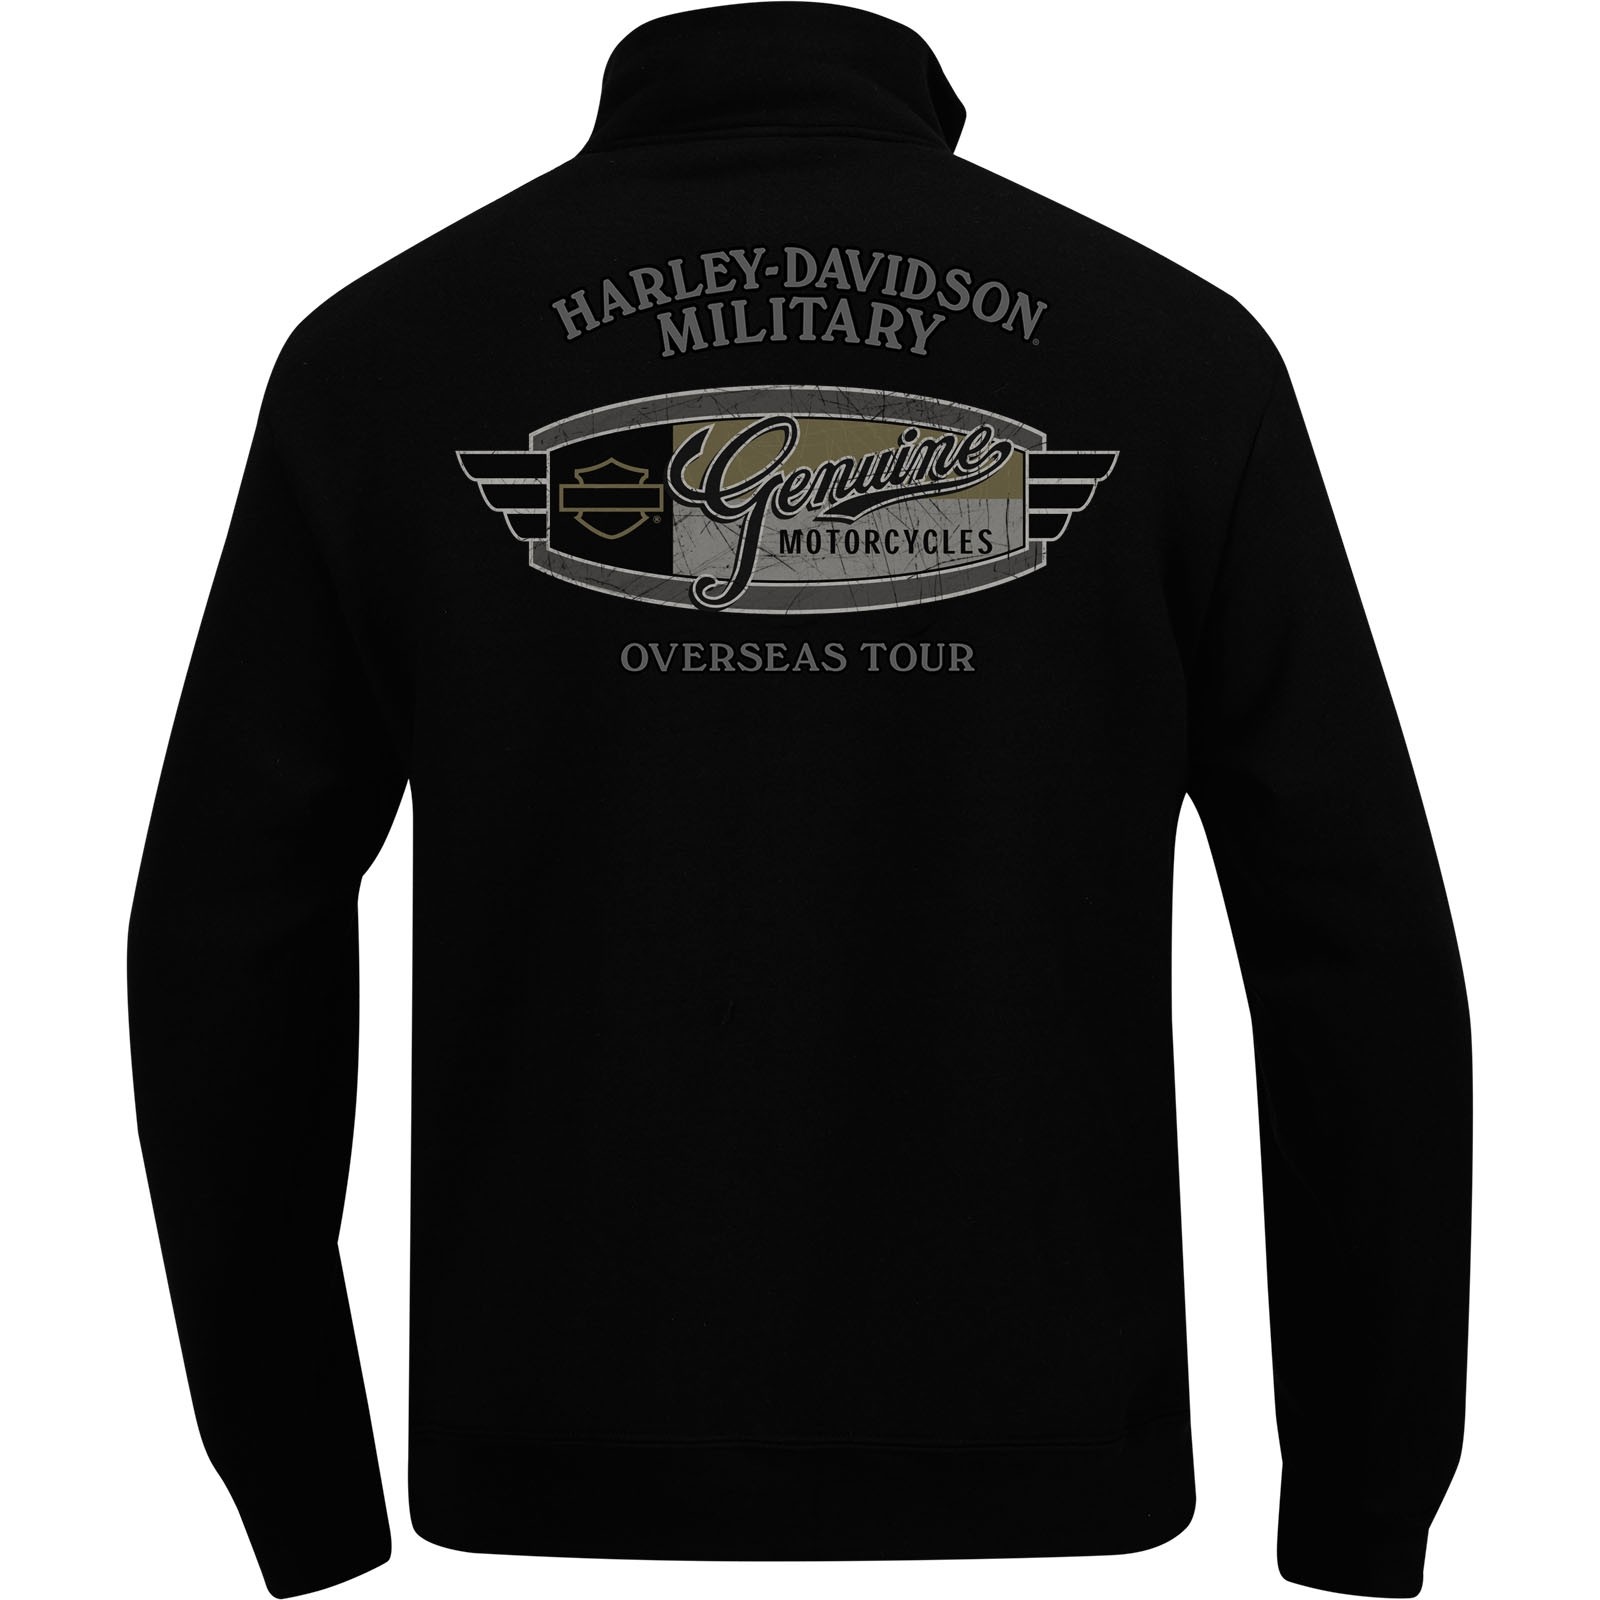  Harley  Davidson  Military  Hoodless Zip Sweatjacket Trade 